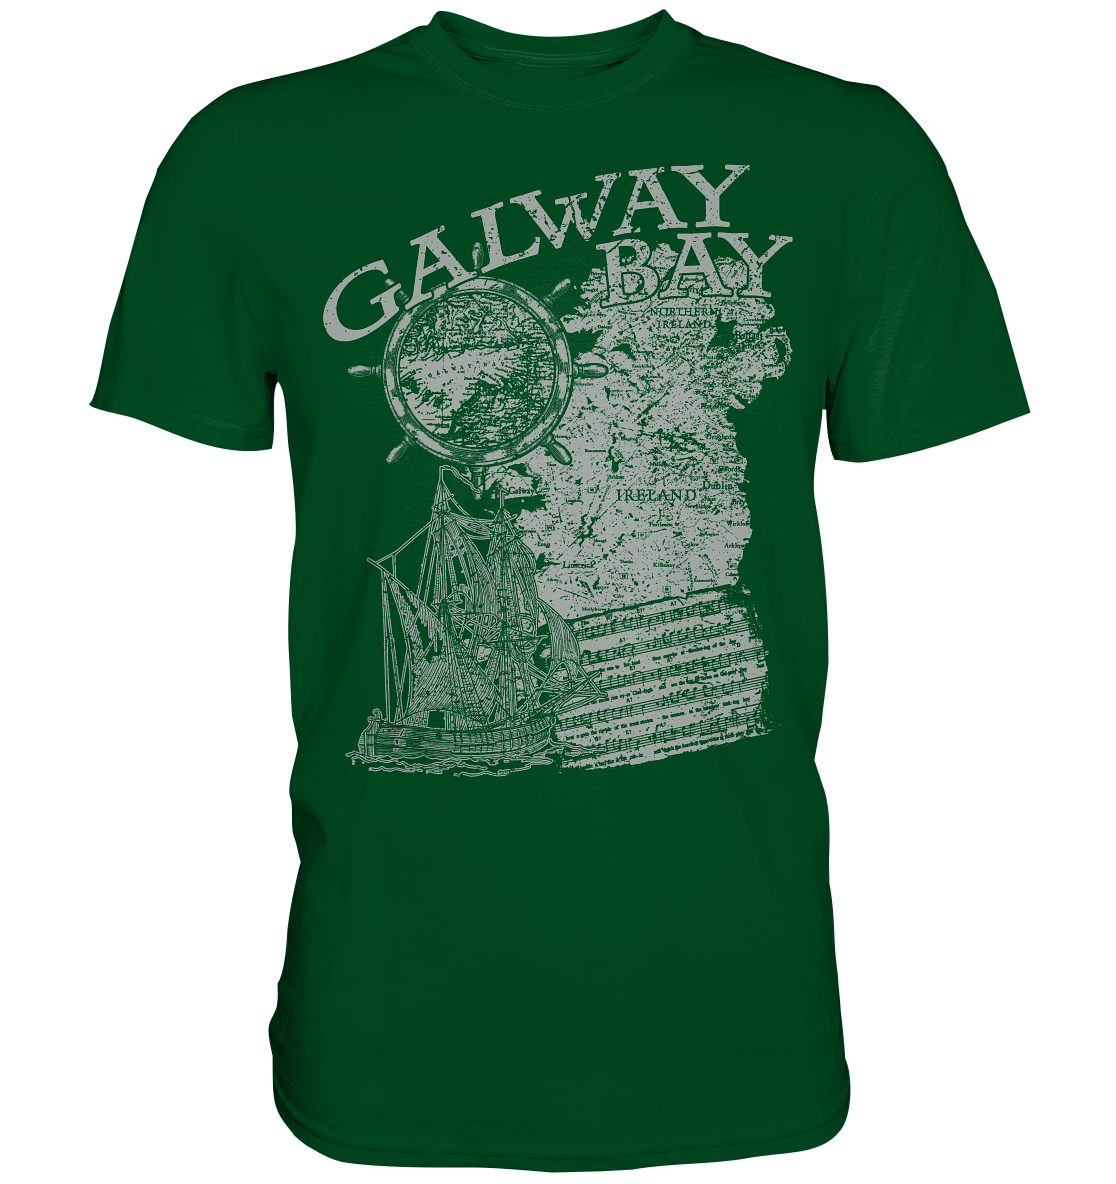 "Galway Bay" - Premium Shirt